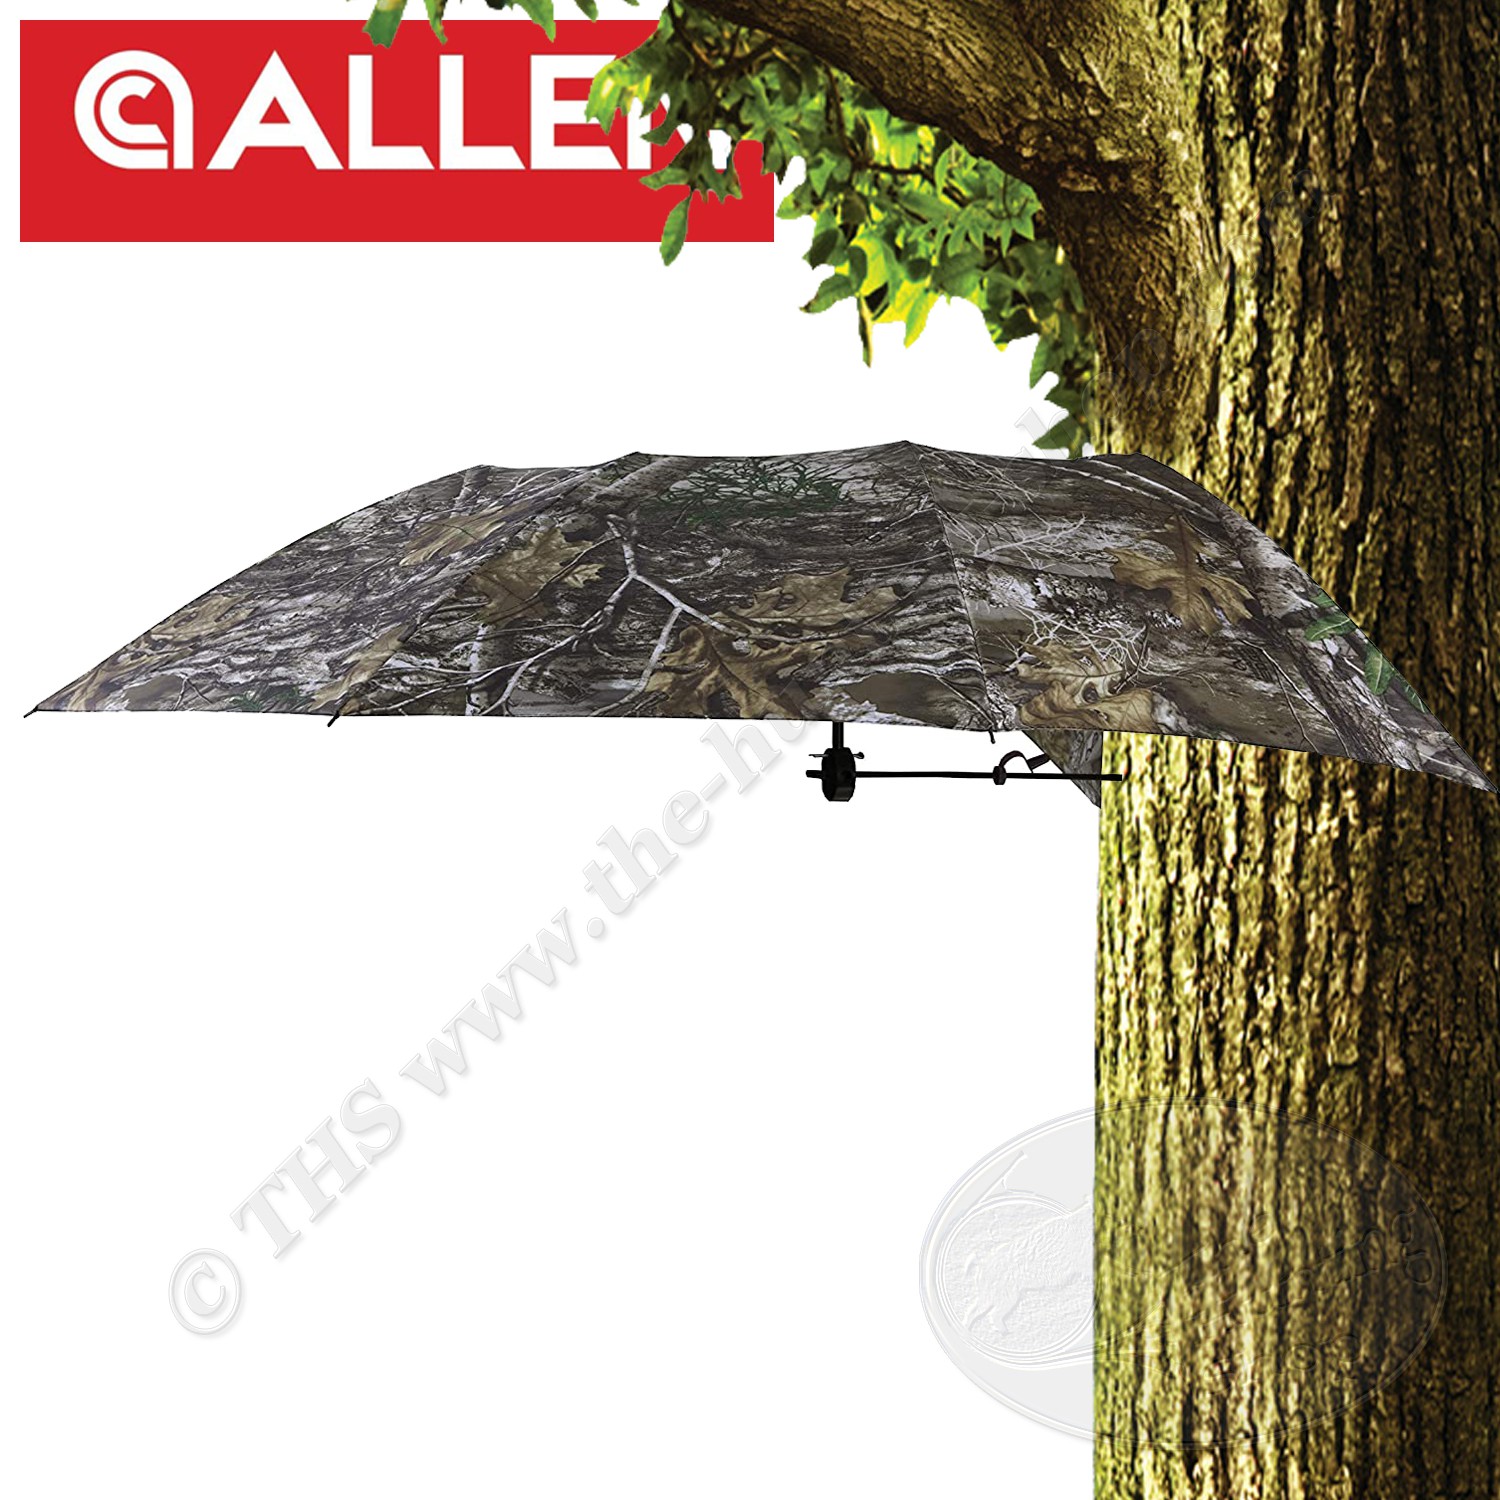 Allen 190 Tree Stand Umbrella 25600 